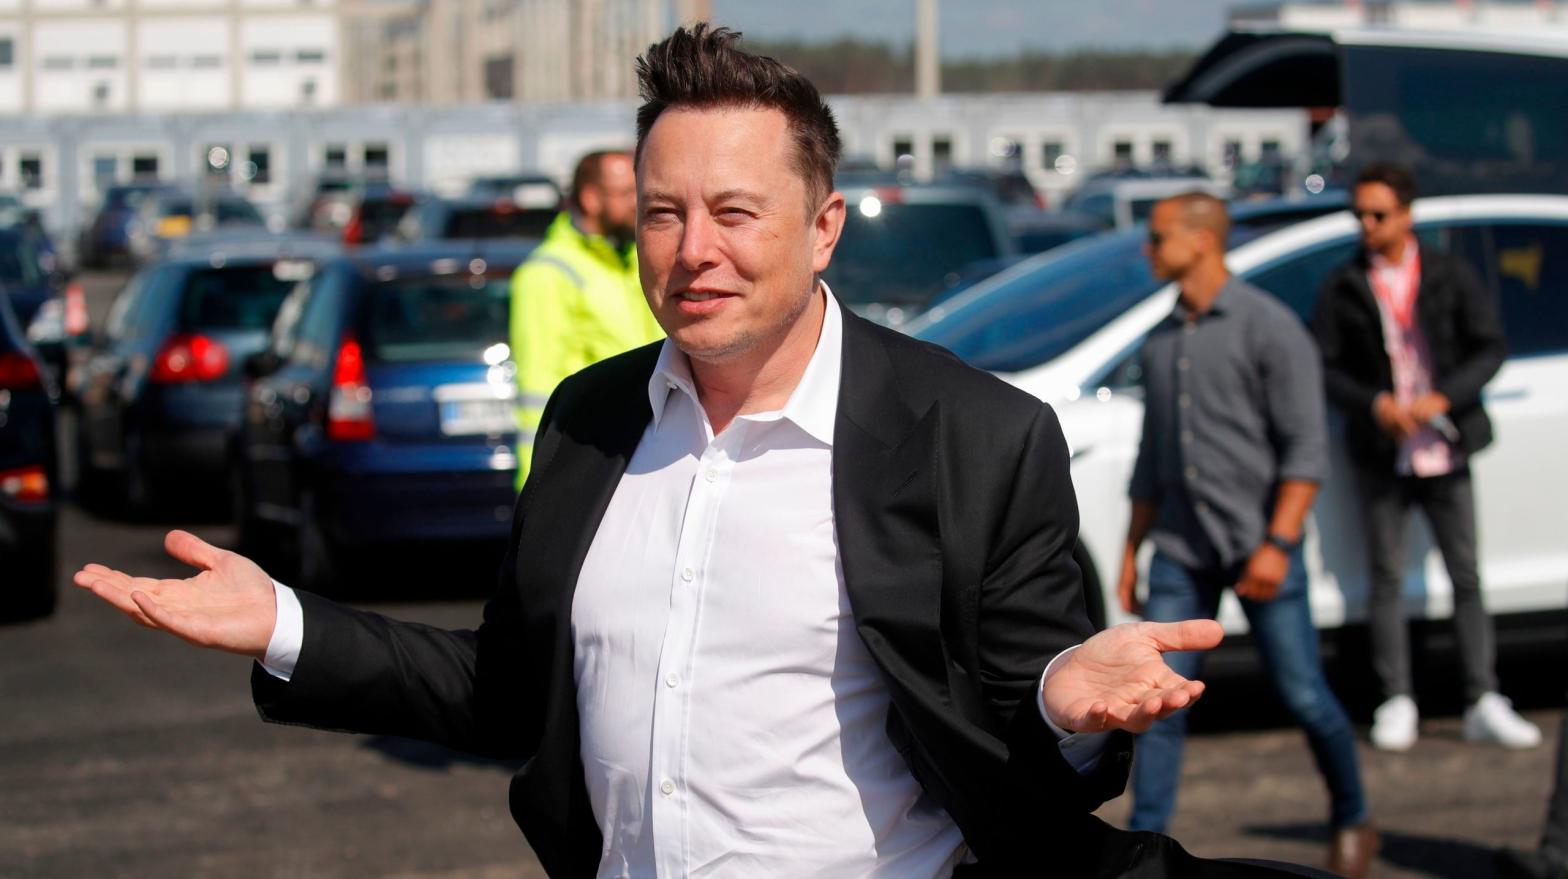 SpaceX founder Elon Musk in Gruenheide near Berlin, Germany on September 3, 2020. (Photo: Odd Andersen, Getty Images)